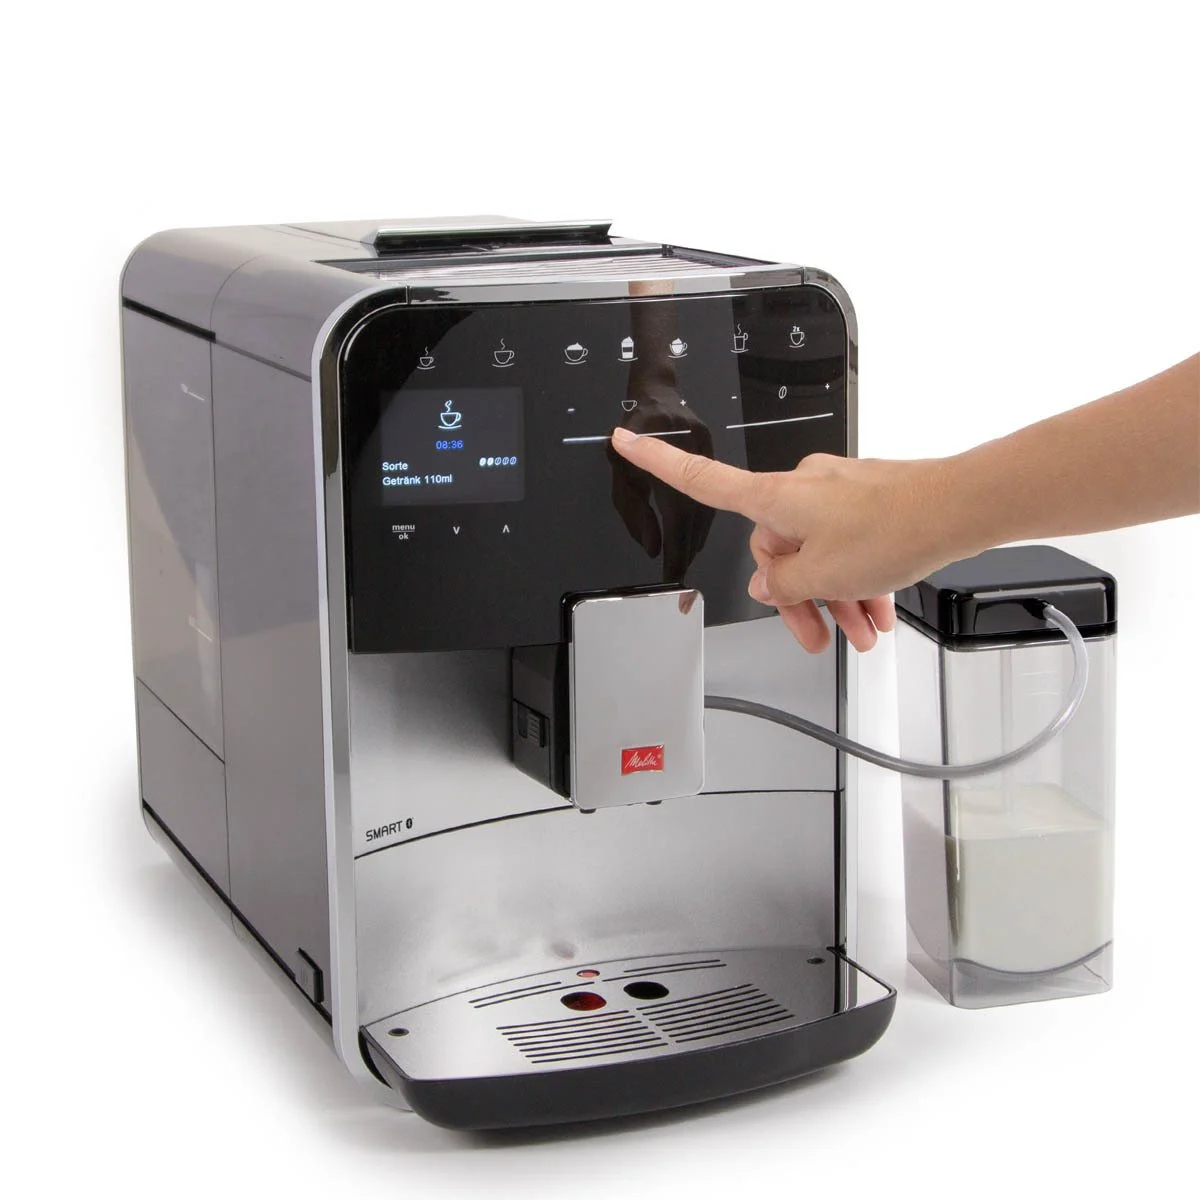 Melitta Caffeo Barista T Smart Tam Otomatik Kahve Makinesi Gümüş